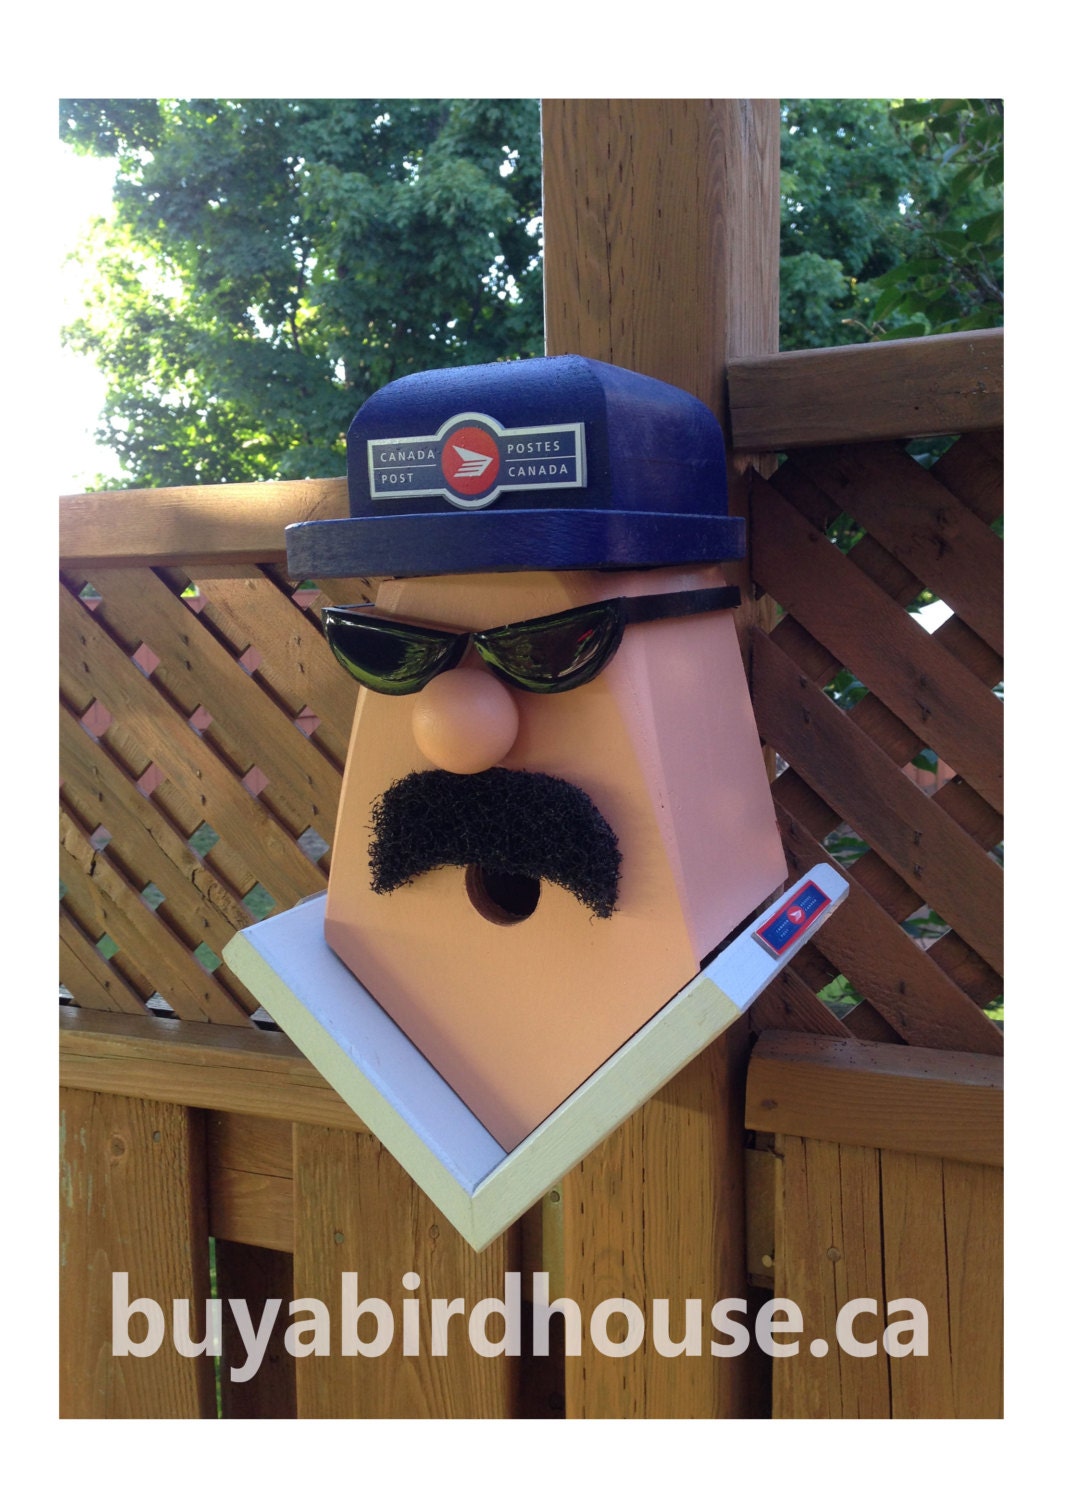 Canada Post " Mailman with Moustache" Birdhouse